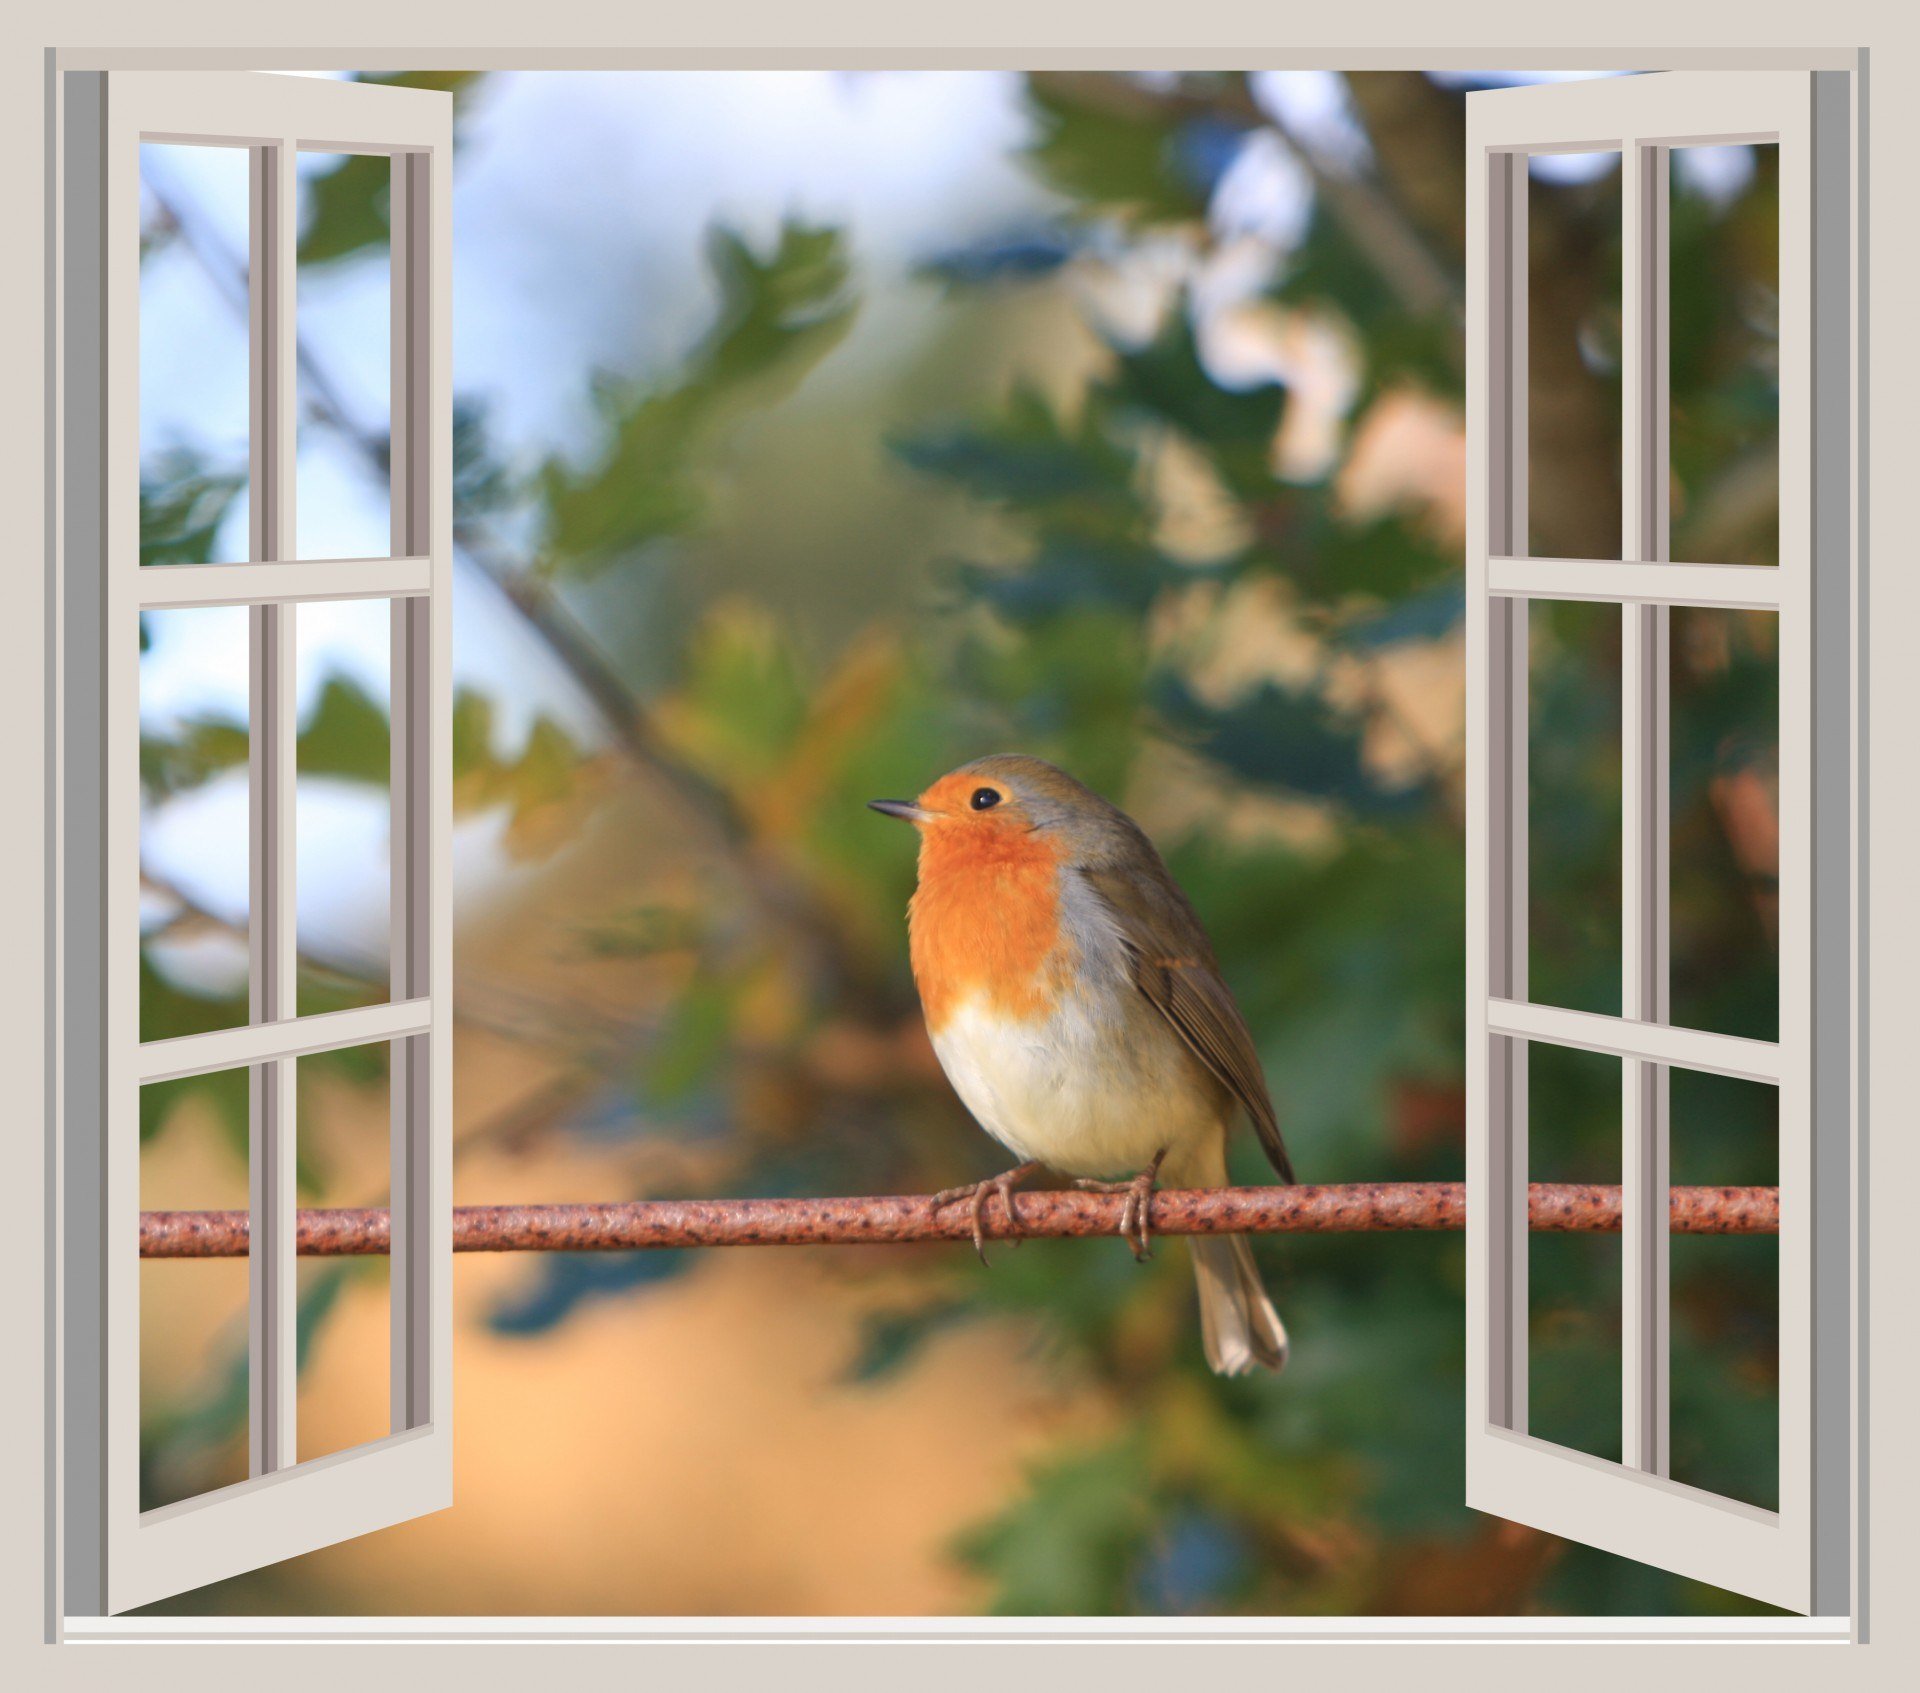 Птичка садится на окошко. Птичка на подоконнике. Птицы на окна. Птички за окном.